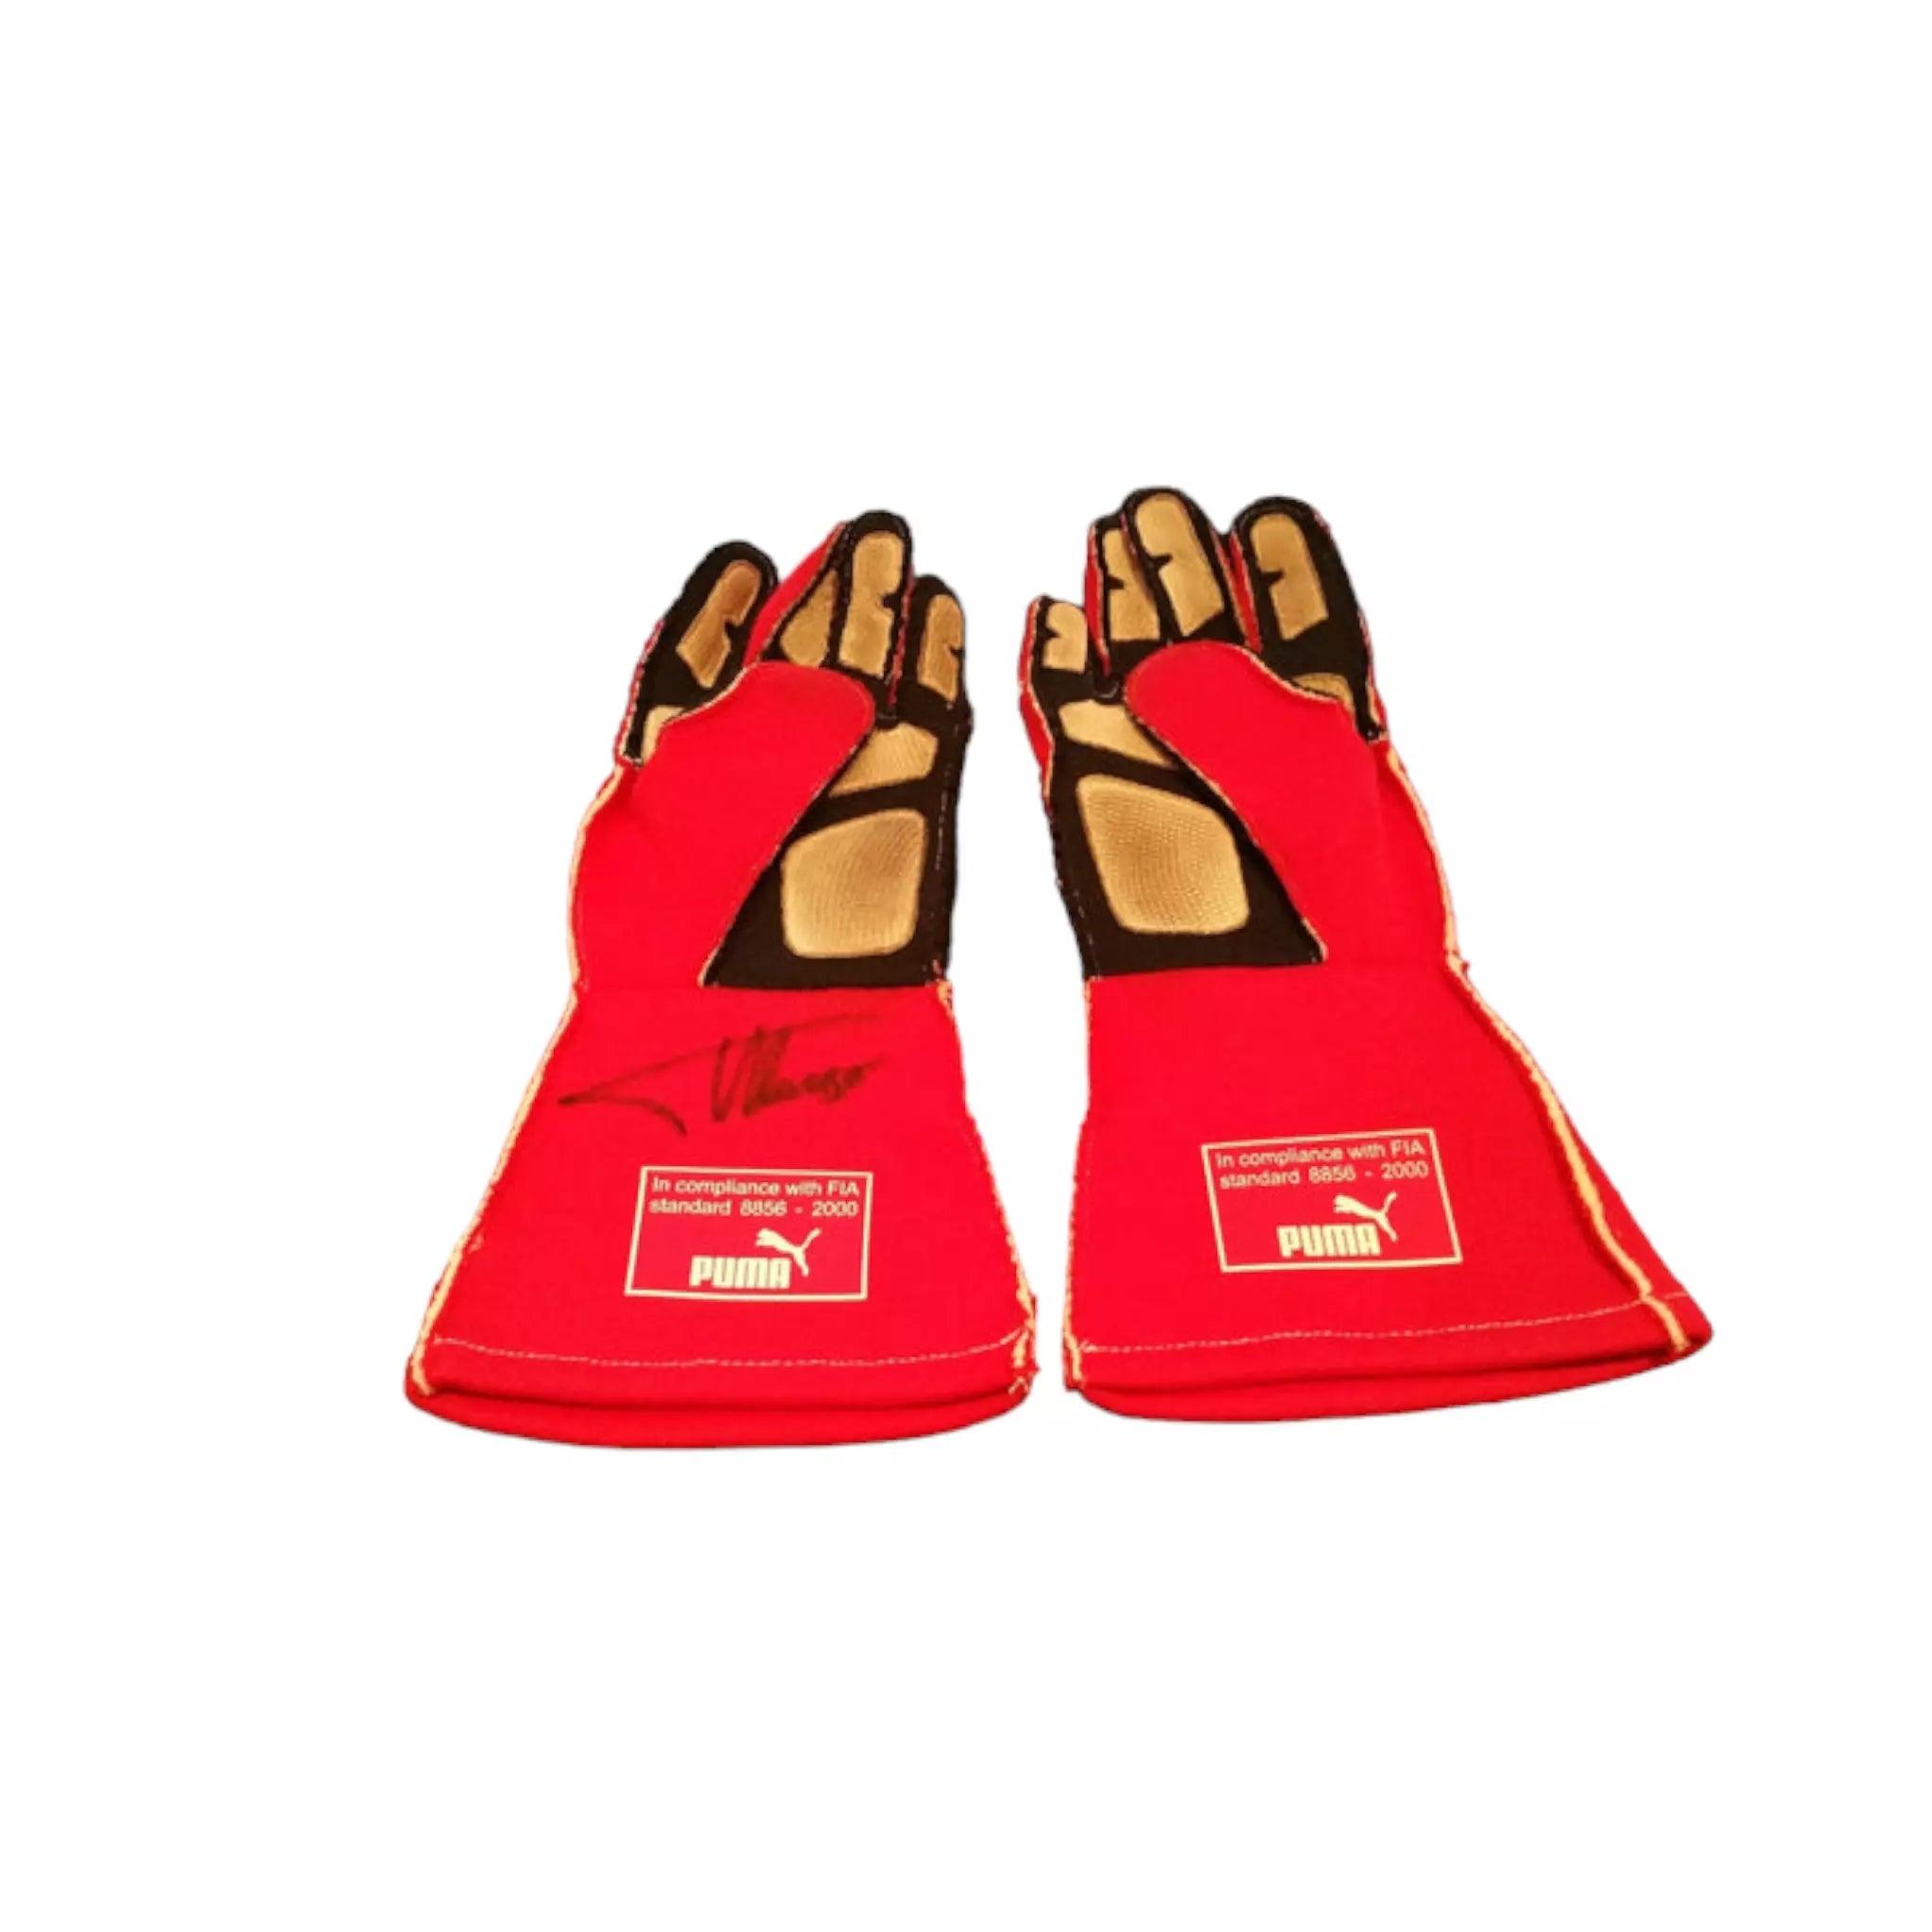 2014 Fernando Alonso gloves - Abu Dhabi GP - Dash Racegear 